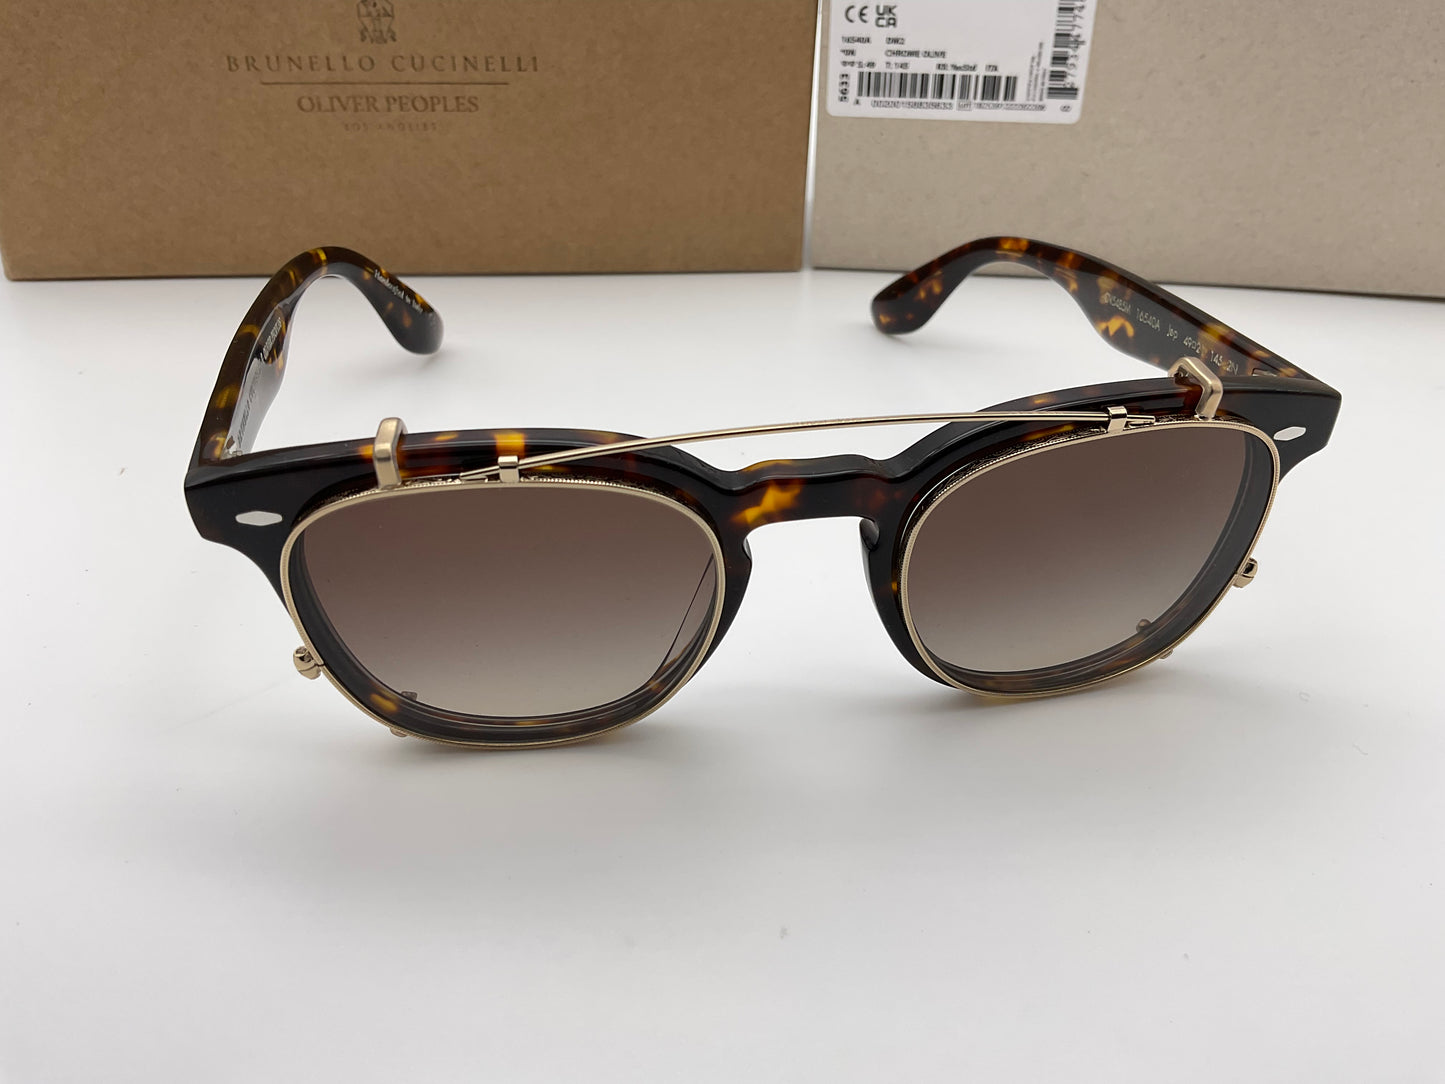 Oliver Peoples Jep Light Olive Gradient Dm2 OV5485M 16540A 49mm Havana Sunglasses Italy